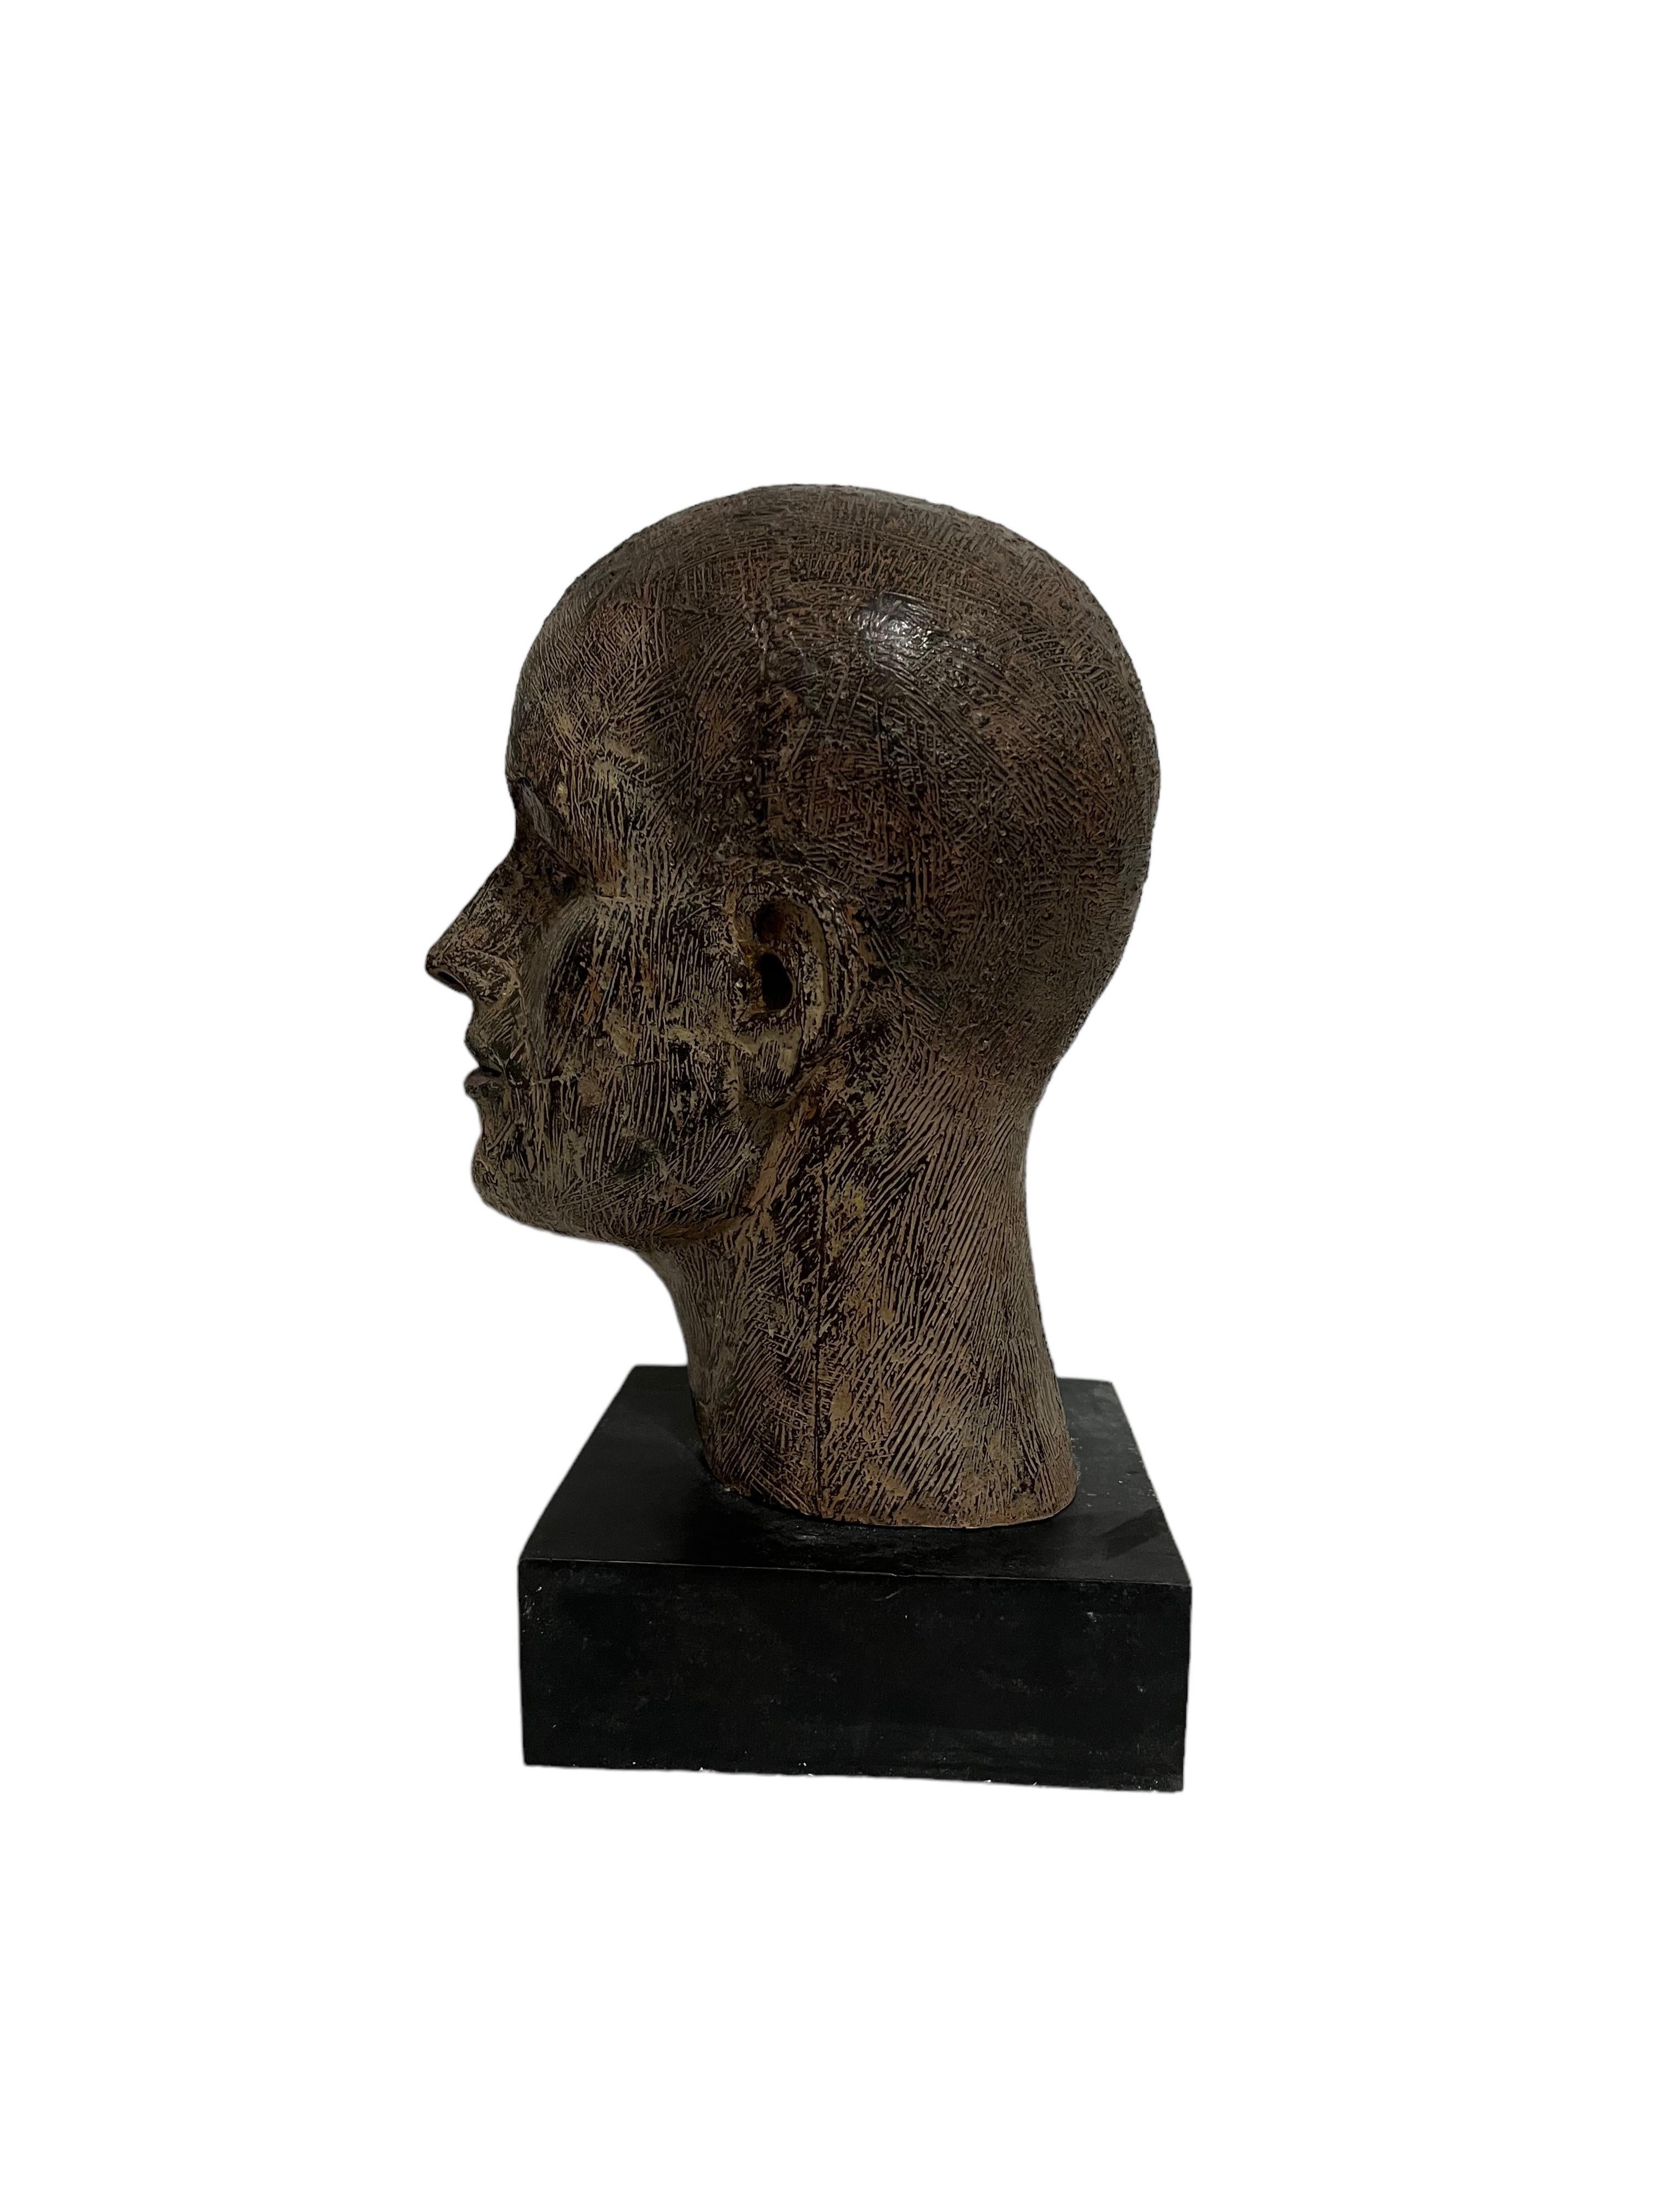 Rare Cast Painted Bronze Head Sculpture British Realist Sculptor John Davies For Sale 14